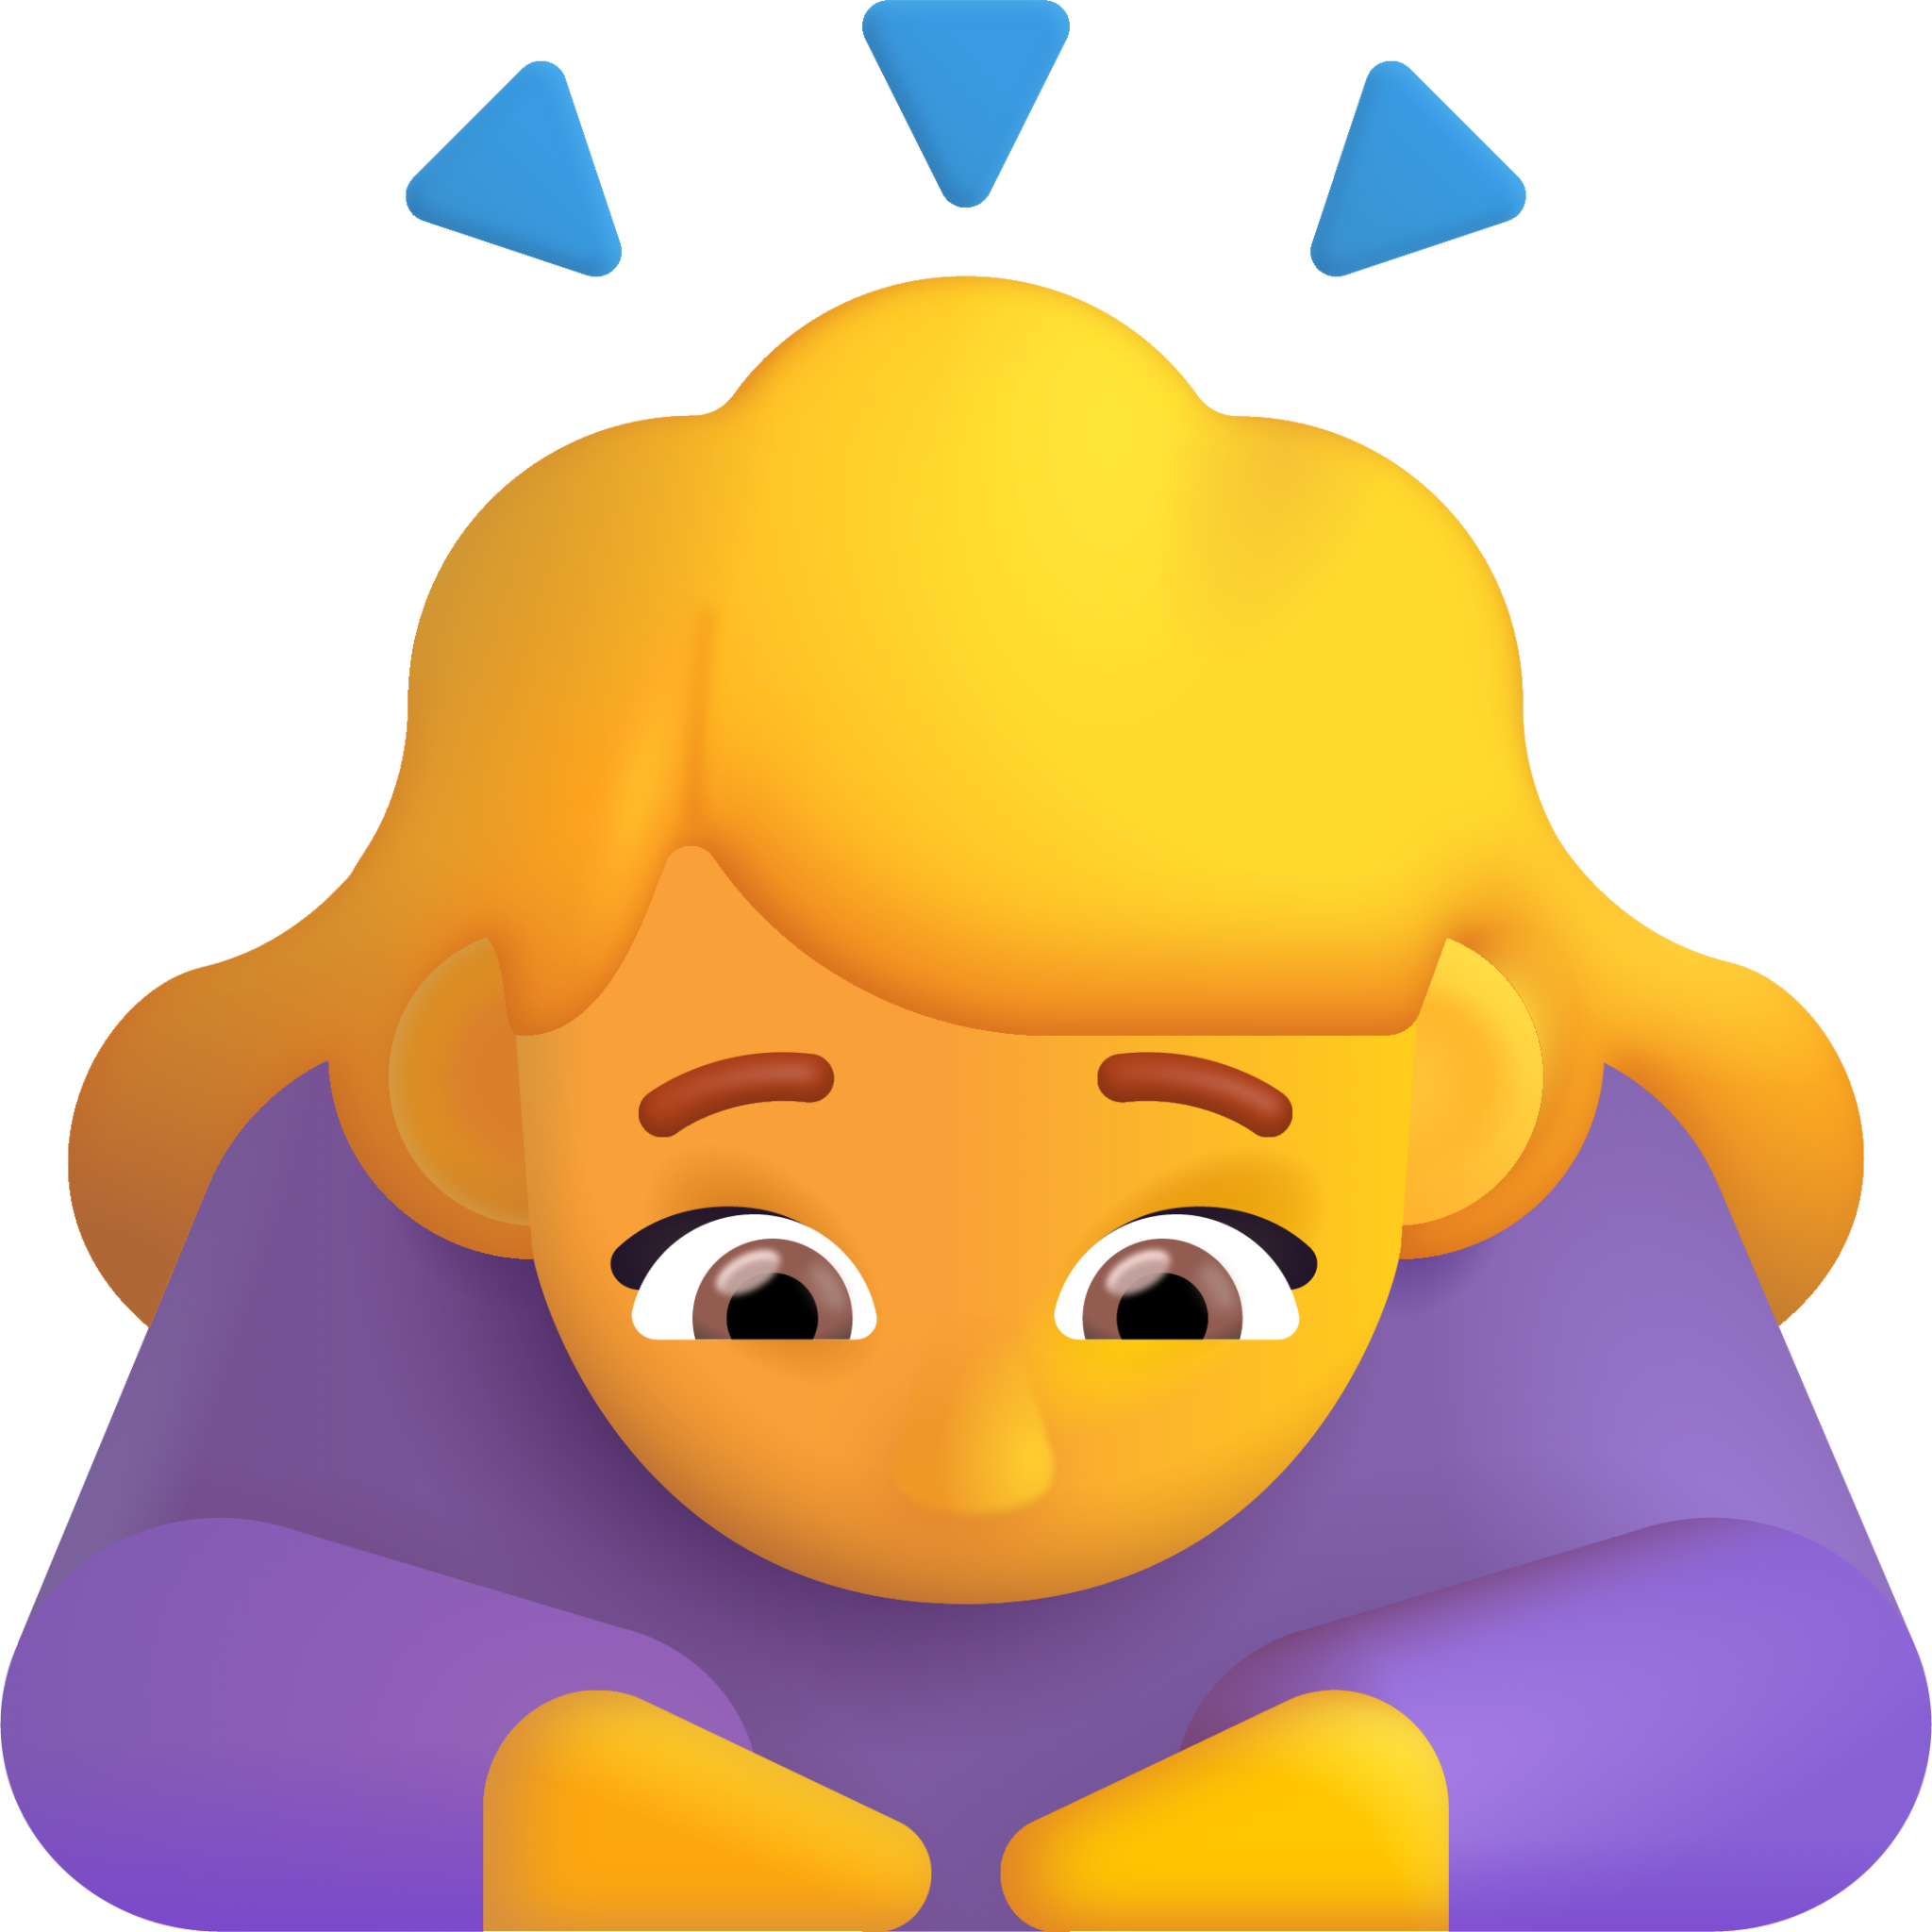 woman bowing default emoji